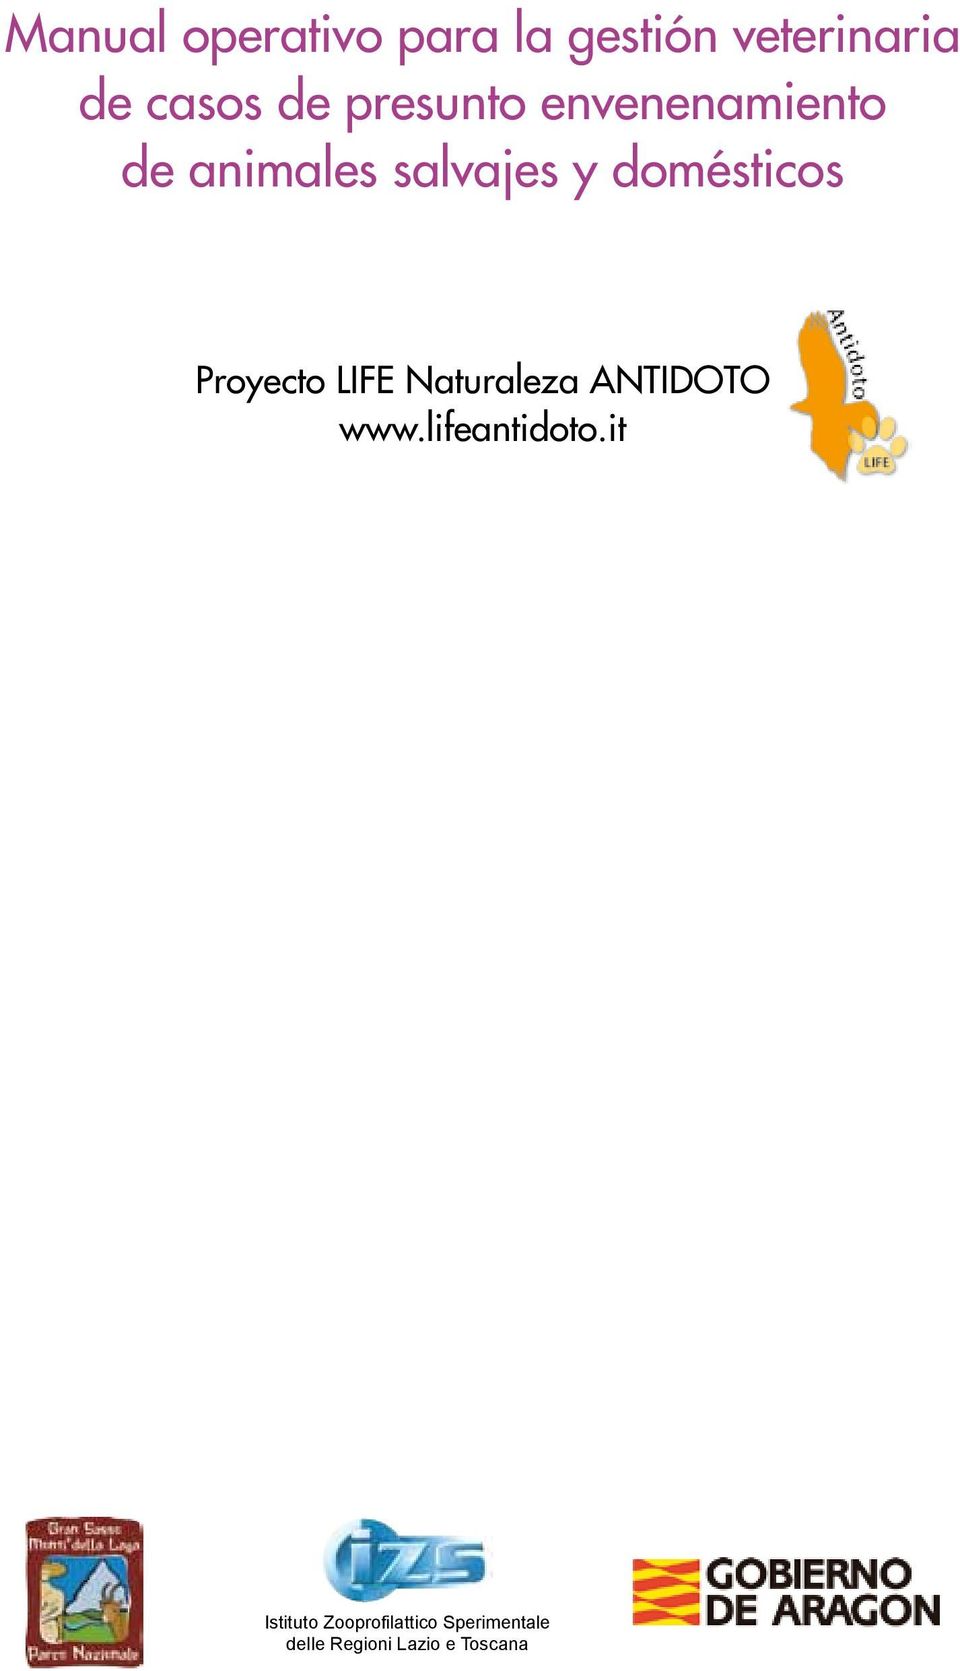 Proyecto LIFE Naturaleza ANTIDOTO www.lifeantidoto.